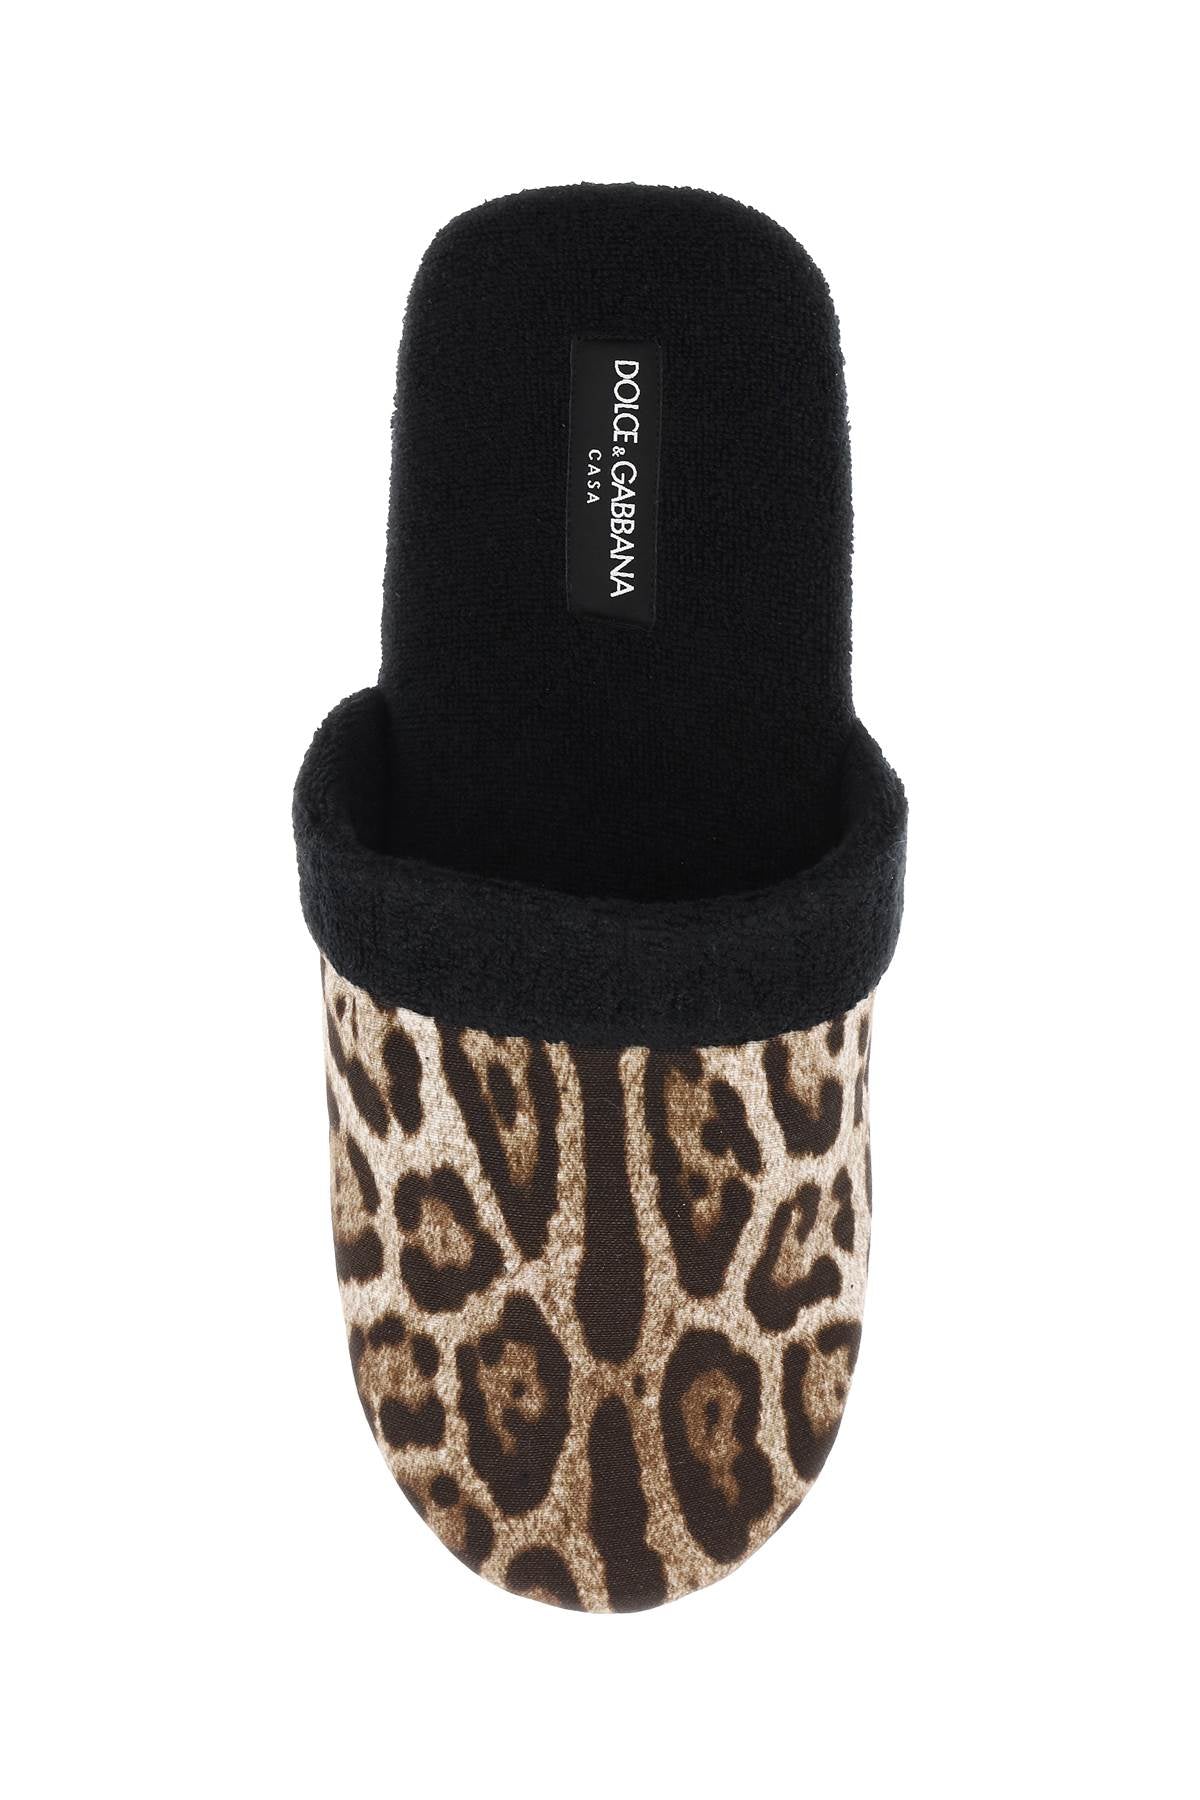 Dolce & Gabbana Dolce & gabbana 'leopardo' terry slippers